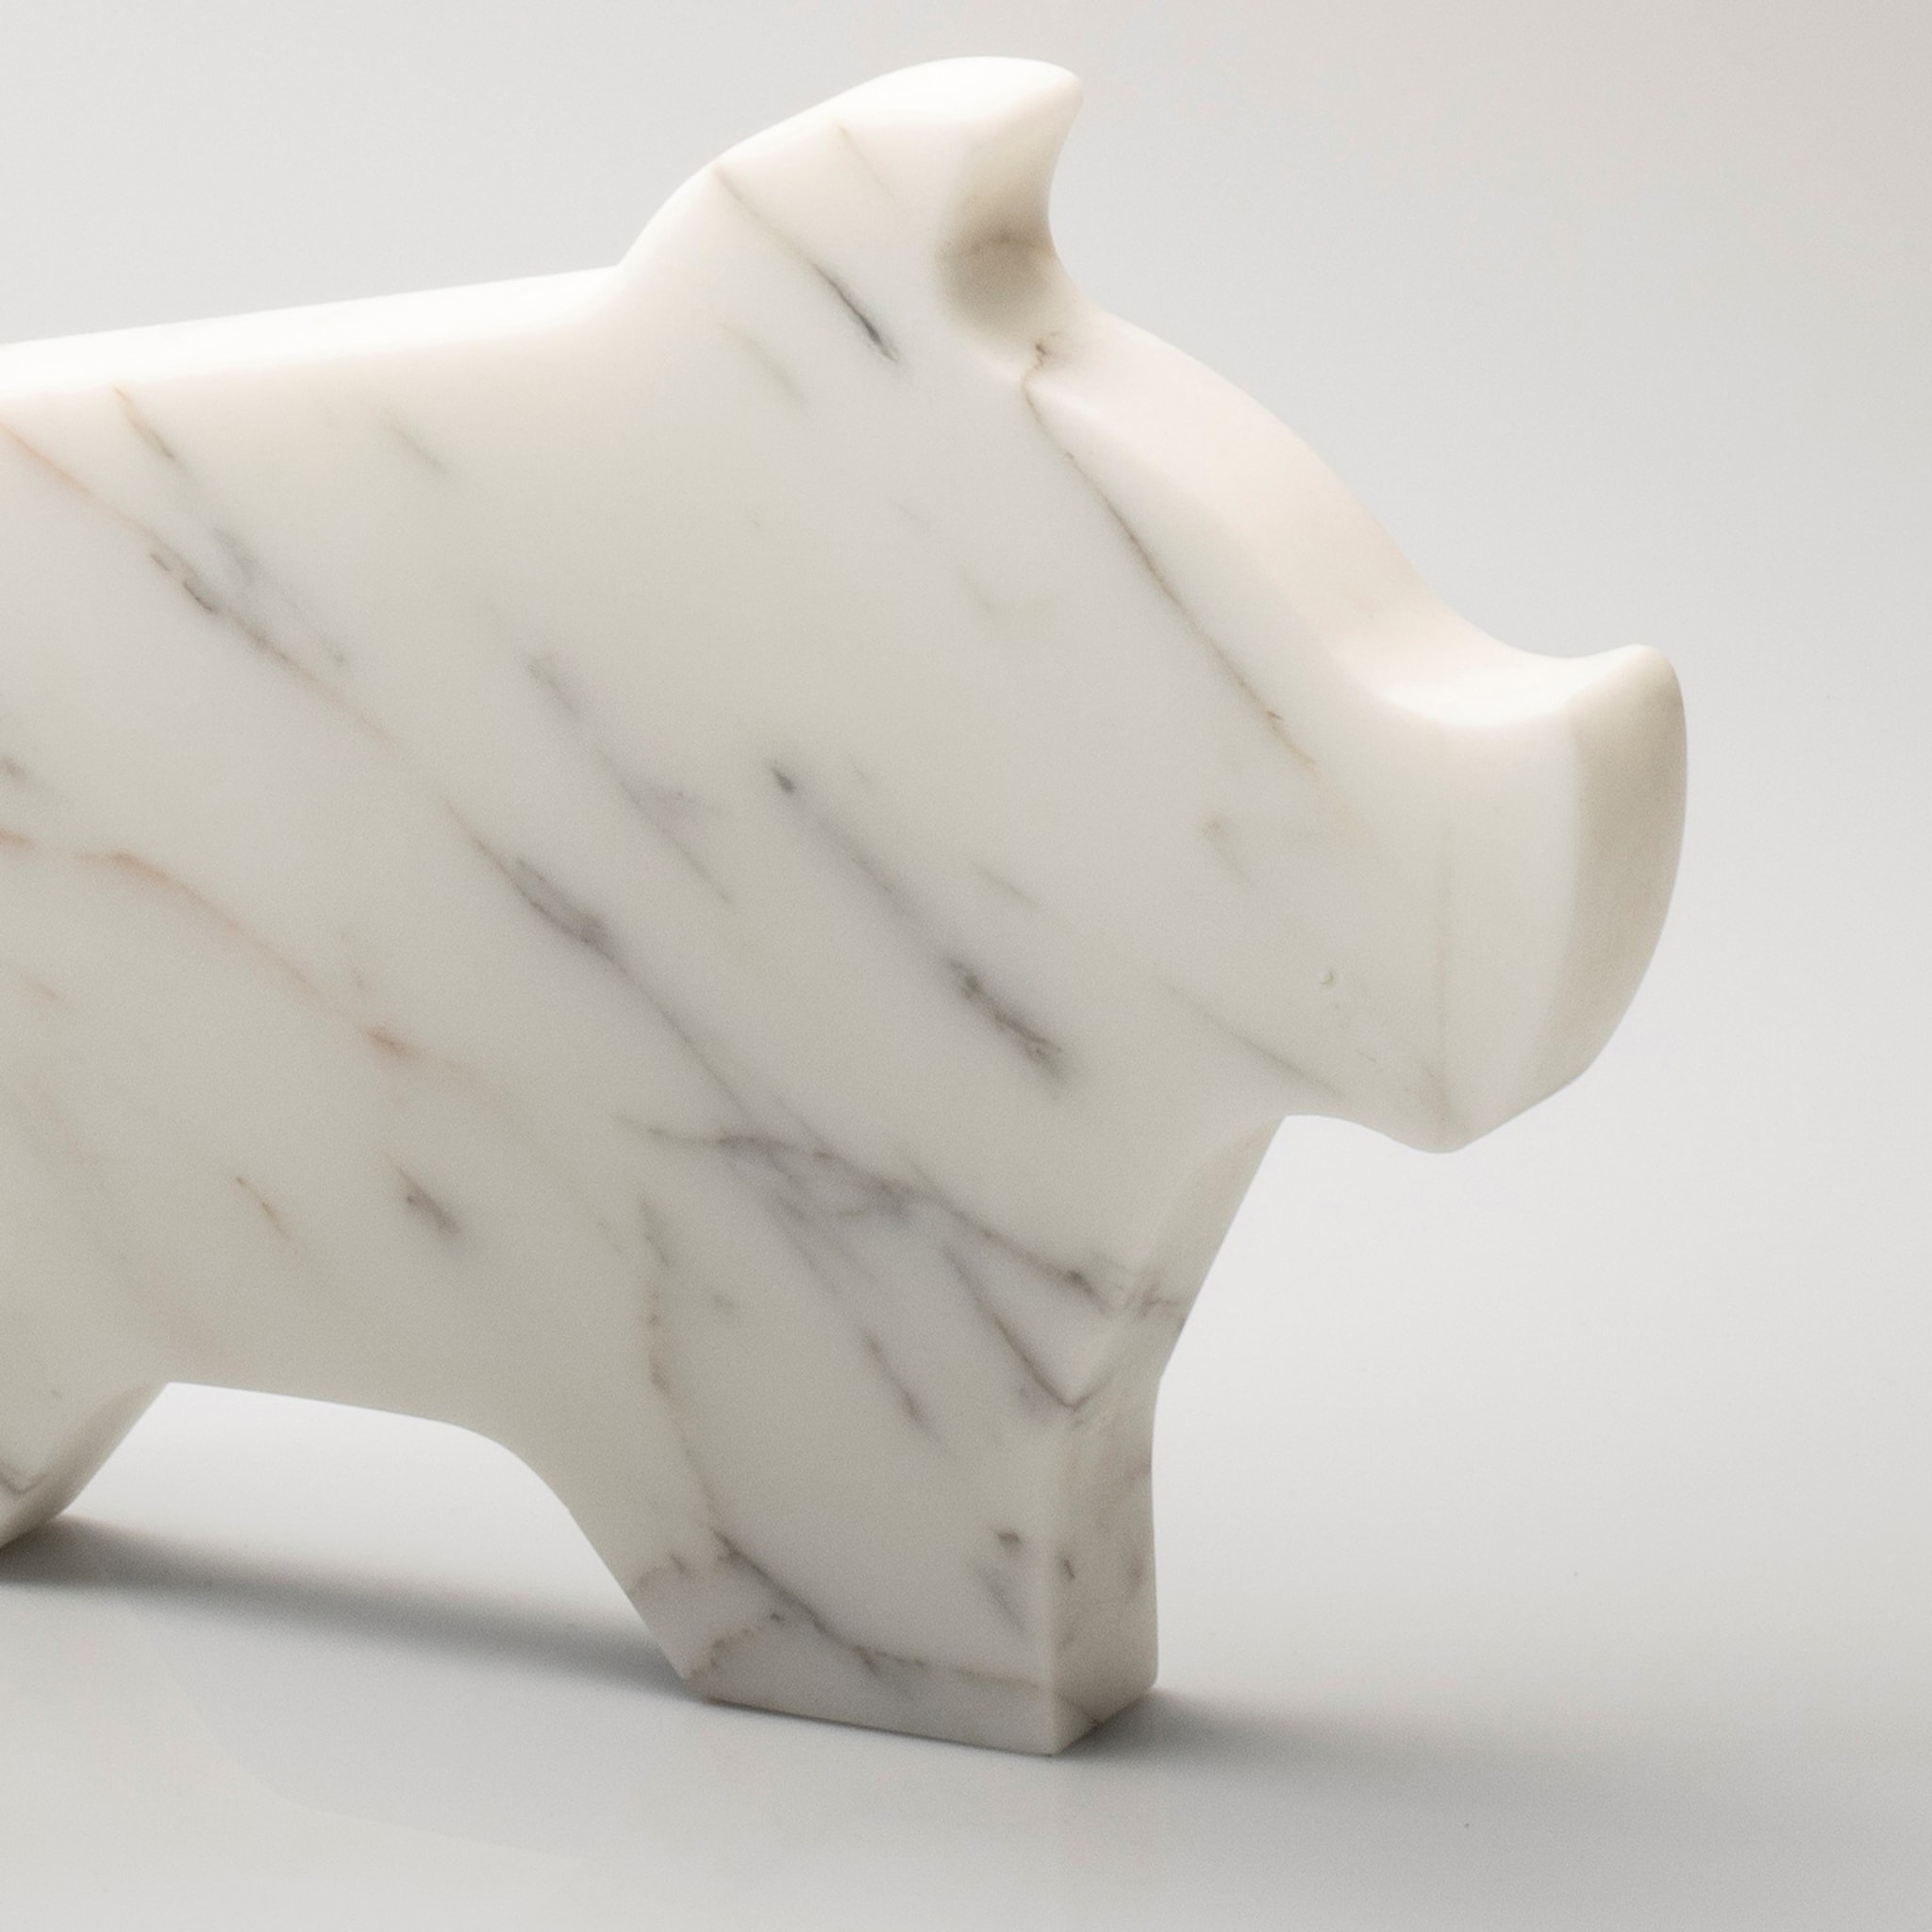 Estatuilla grande de cerdo blanco de Alessandra Grasso - Vista alternativa 1